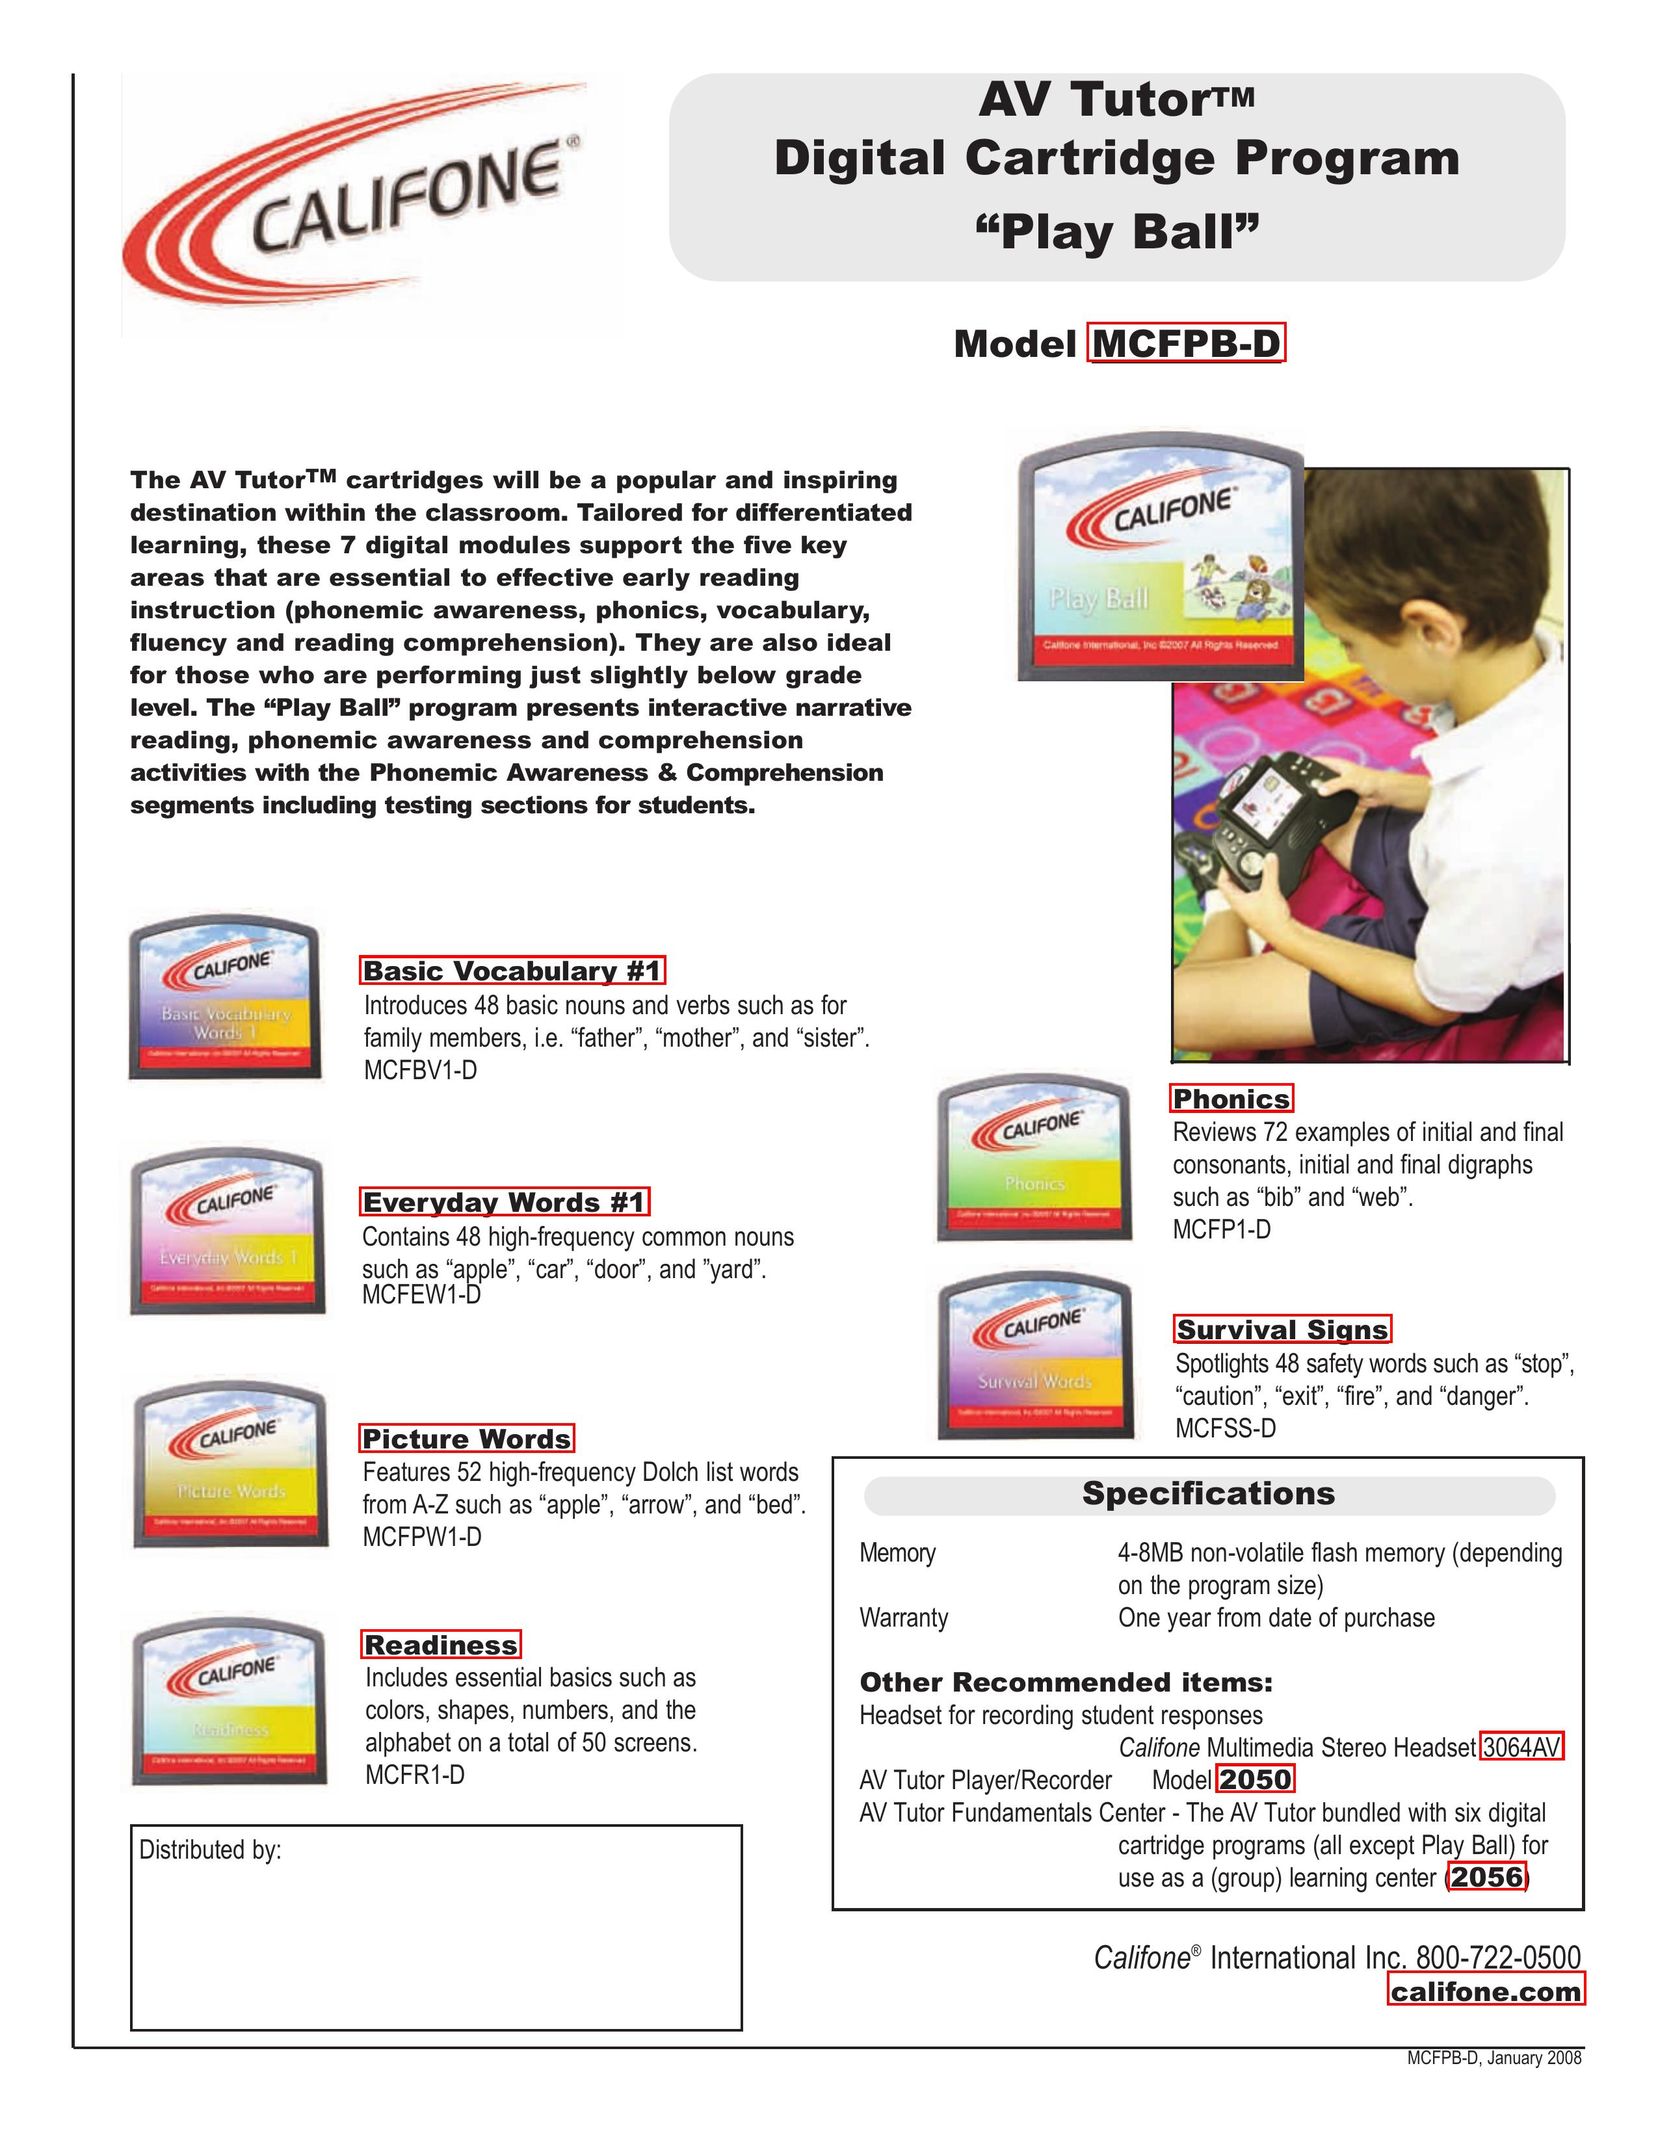 Califone MCFR1-D Video Game Controller User Manual